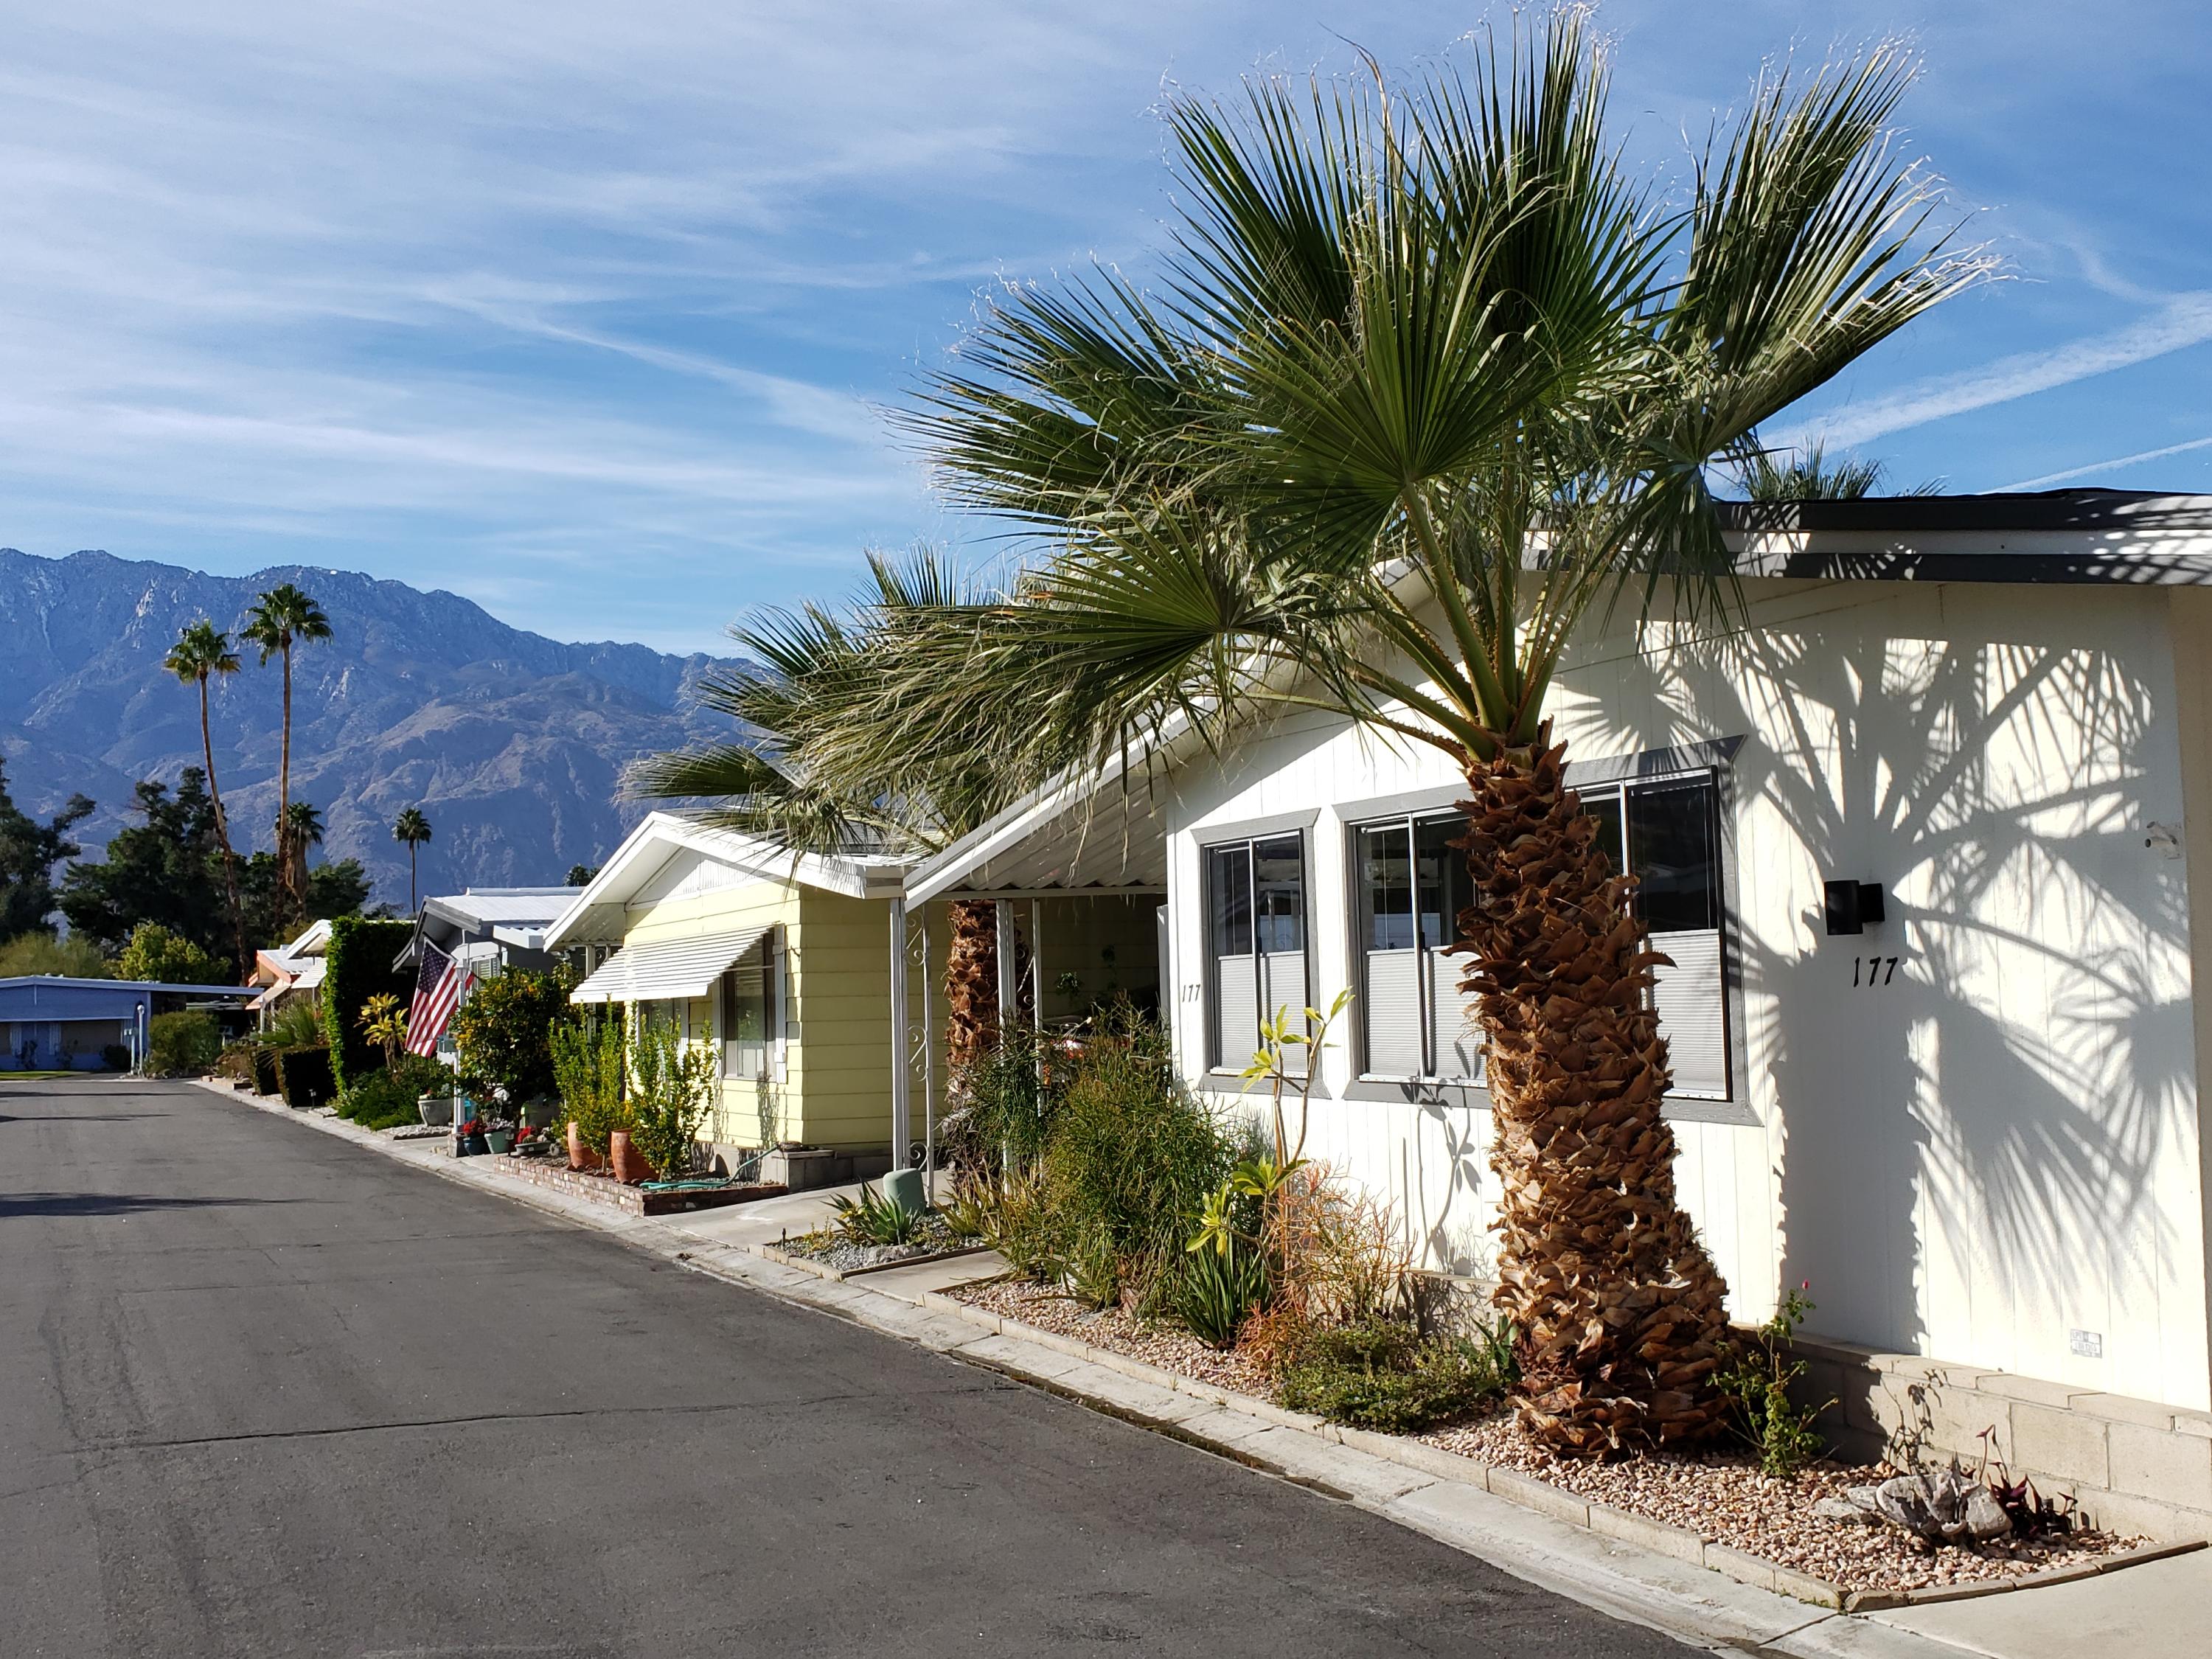 Image Number 1 for 177 Vista De Oeste in Palm Springs